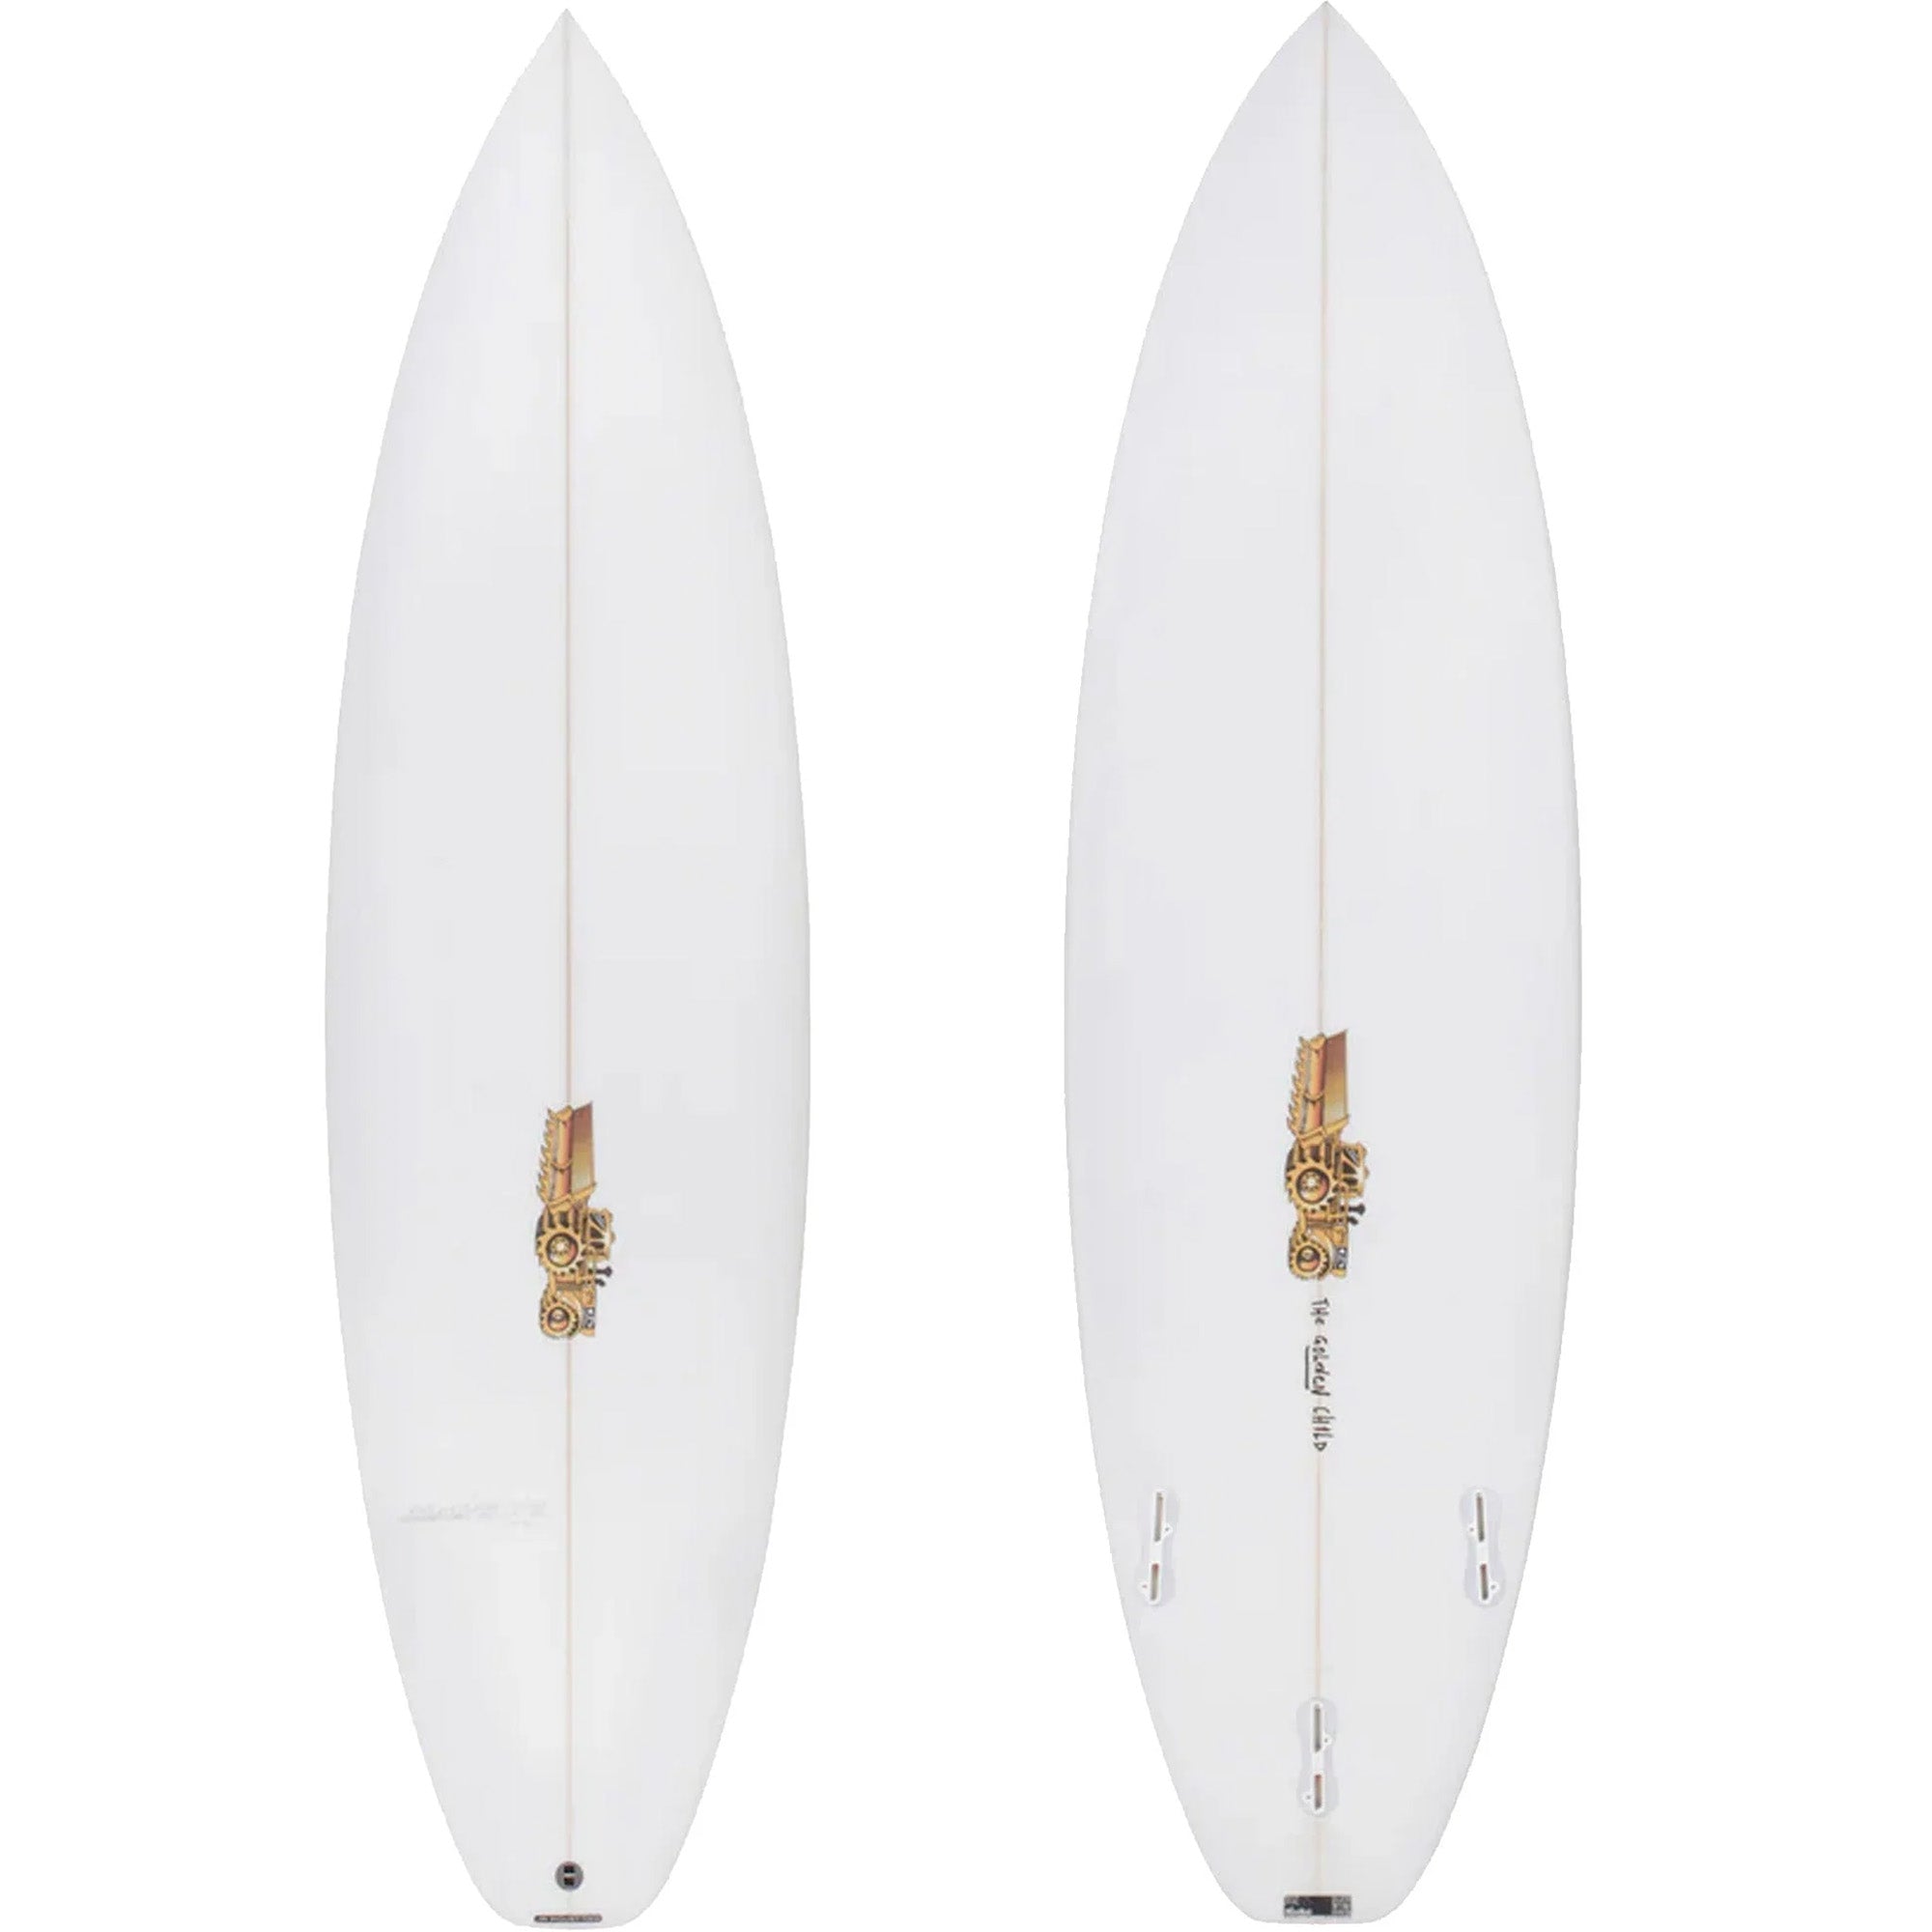 JS Golden Child Surfboard - FCS II